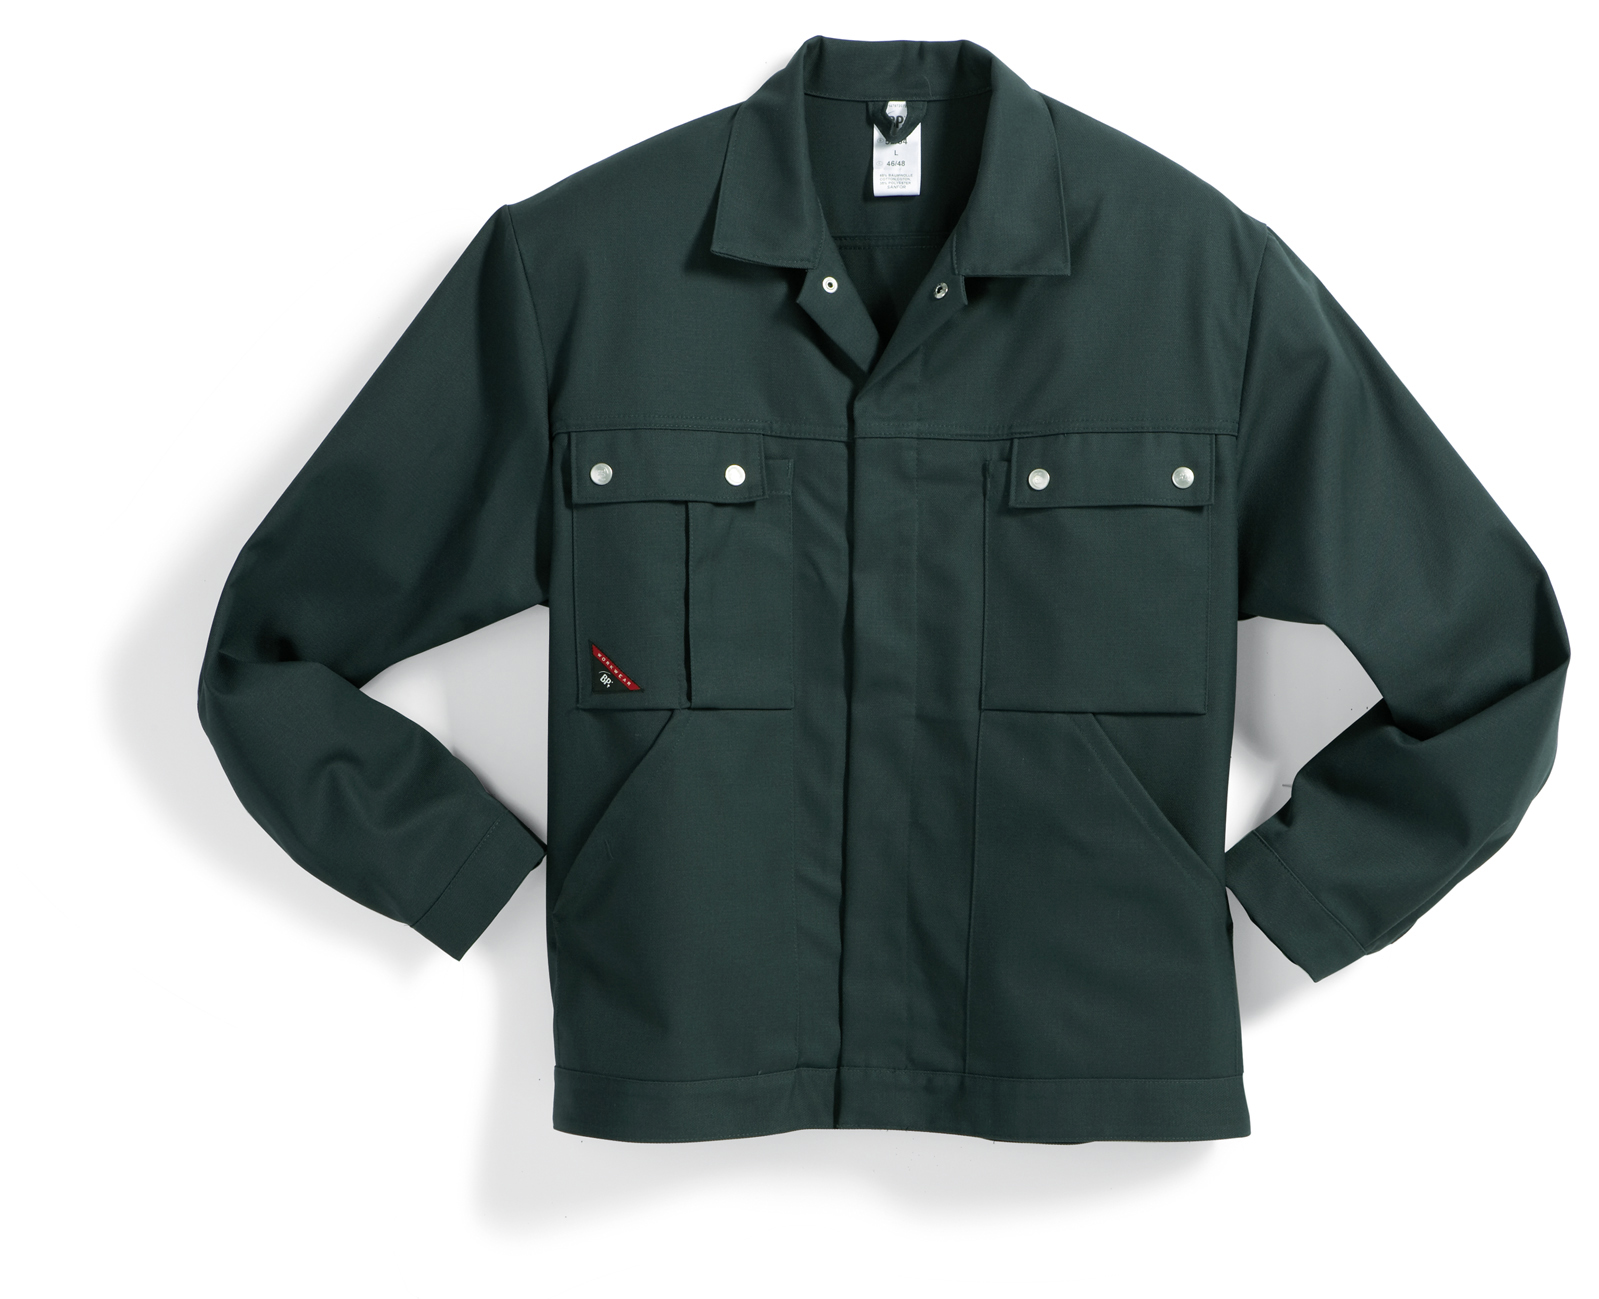 BP Herrenblouson Arbeitsjacke Berufsjacke Arbeitskleidung Berufskleidung verdeckte Druckknopfleiste dunkelgrün